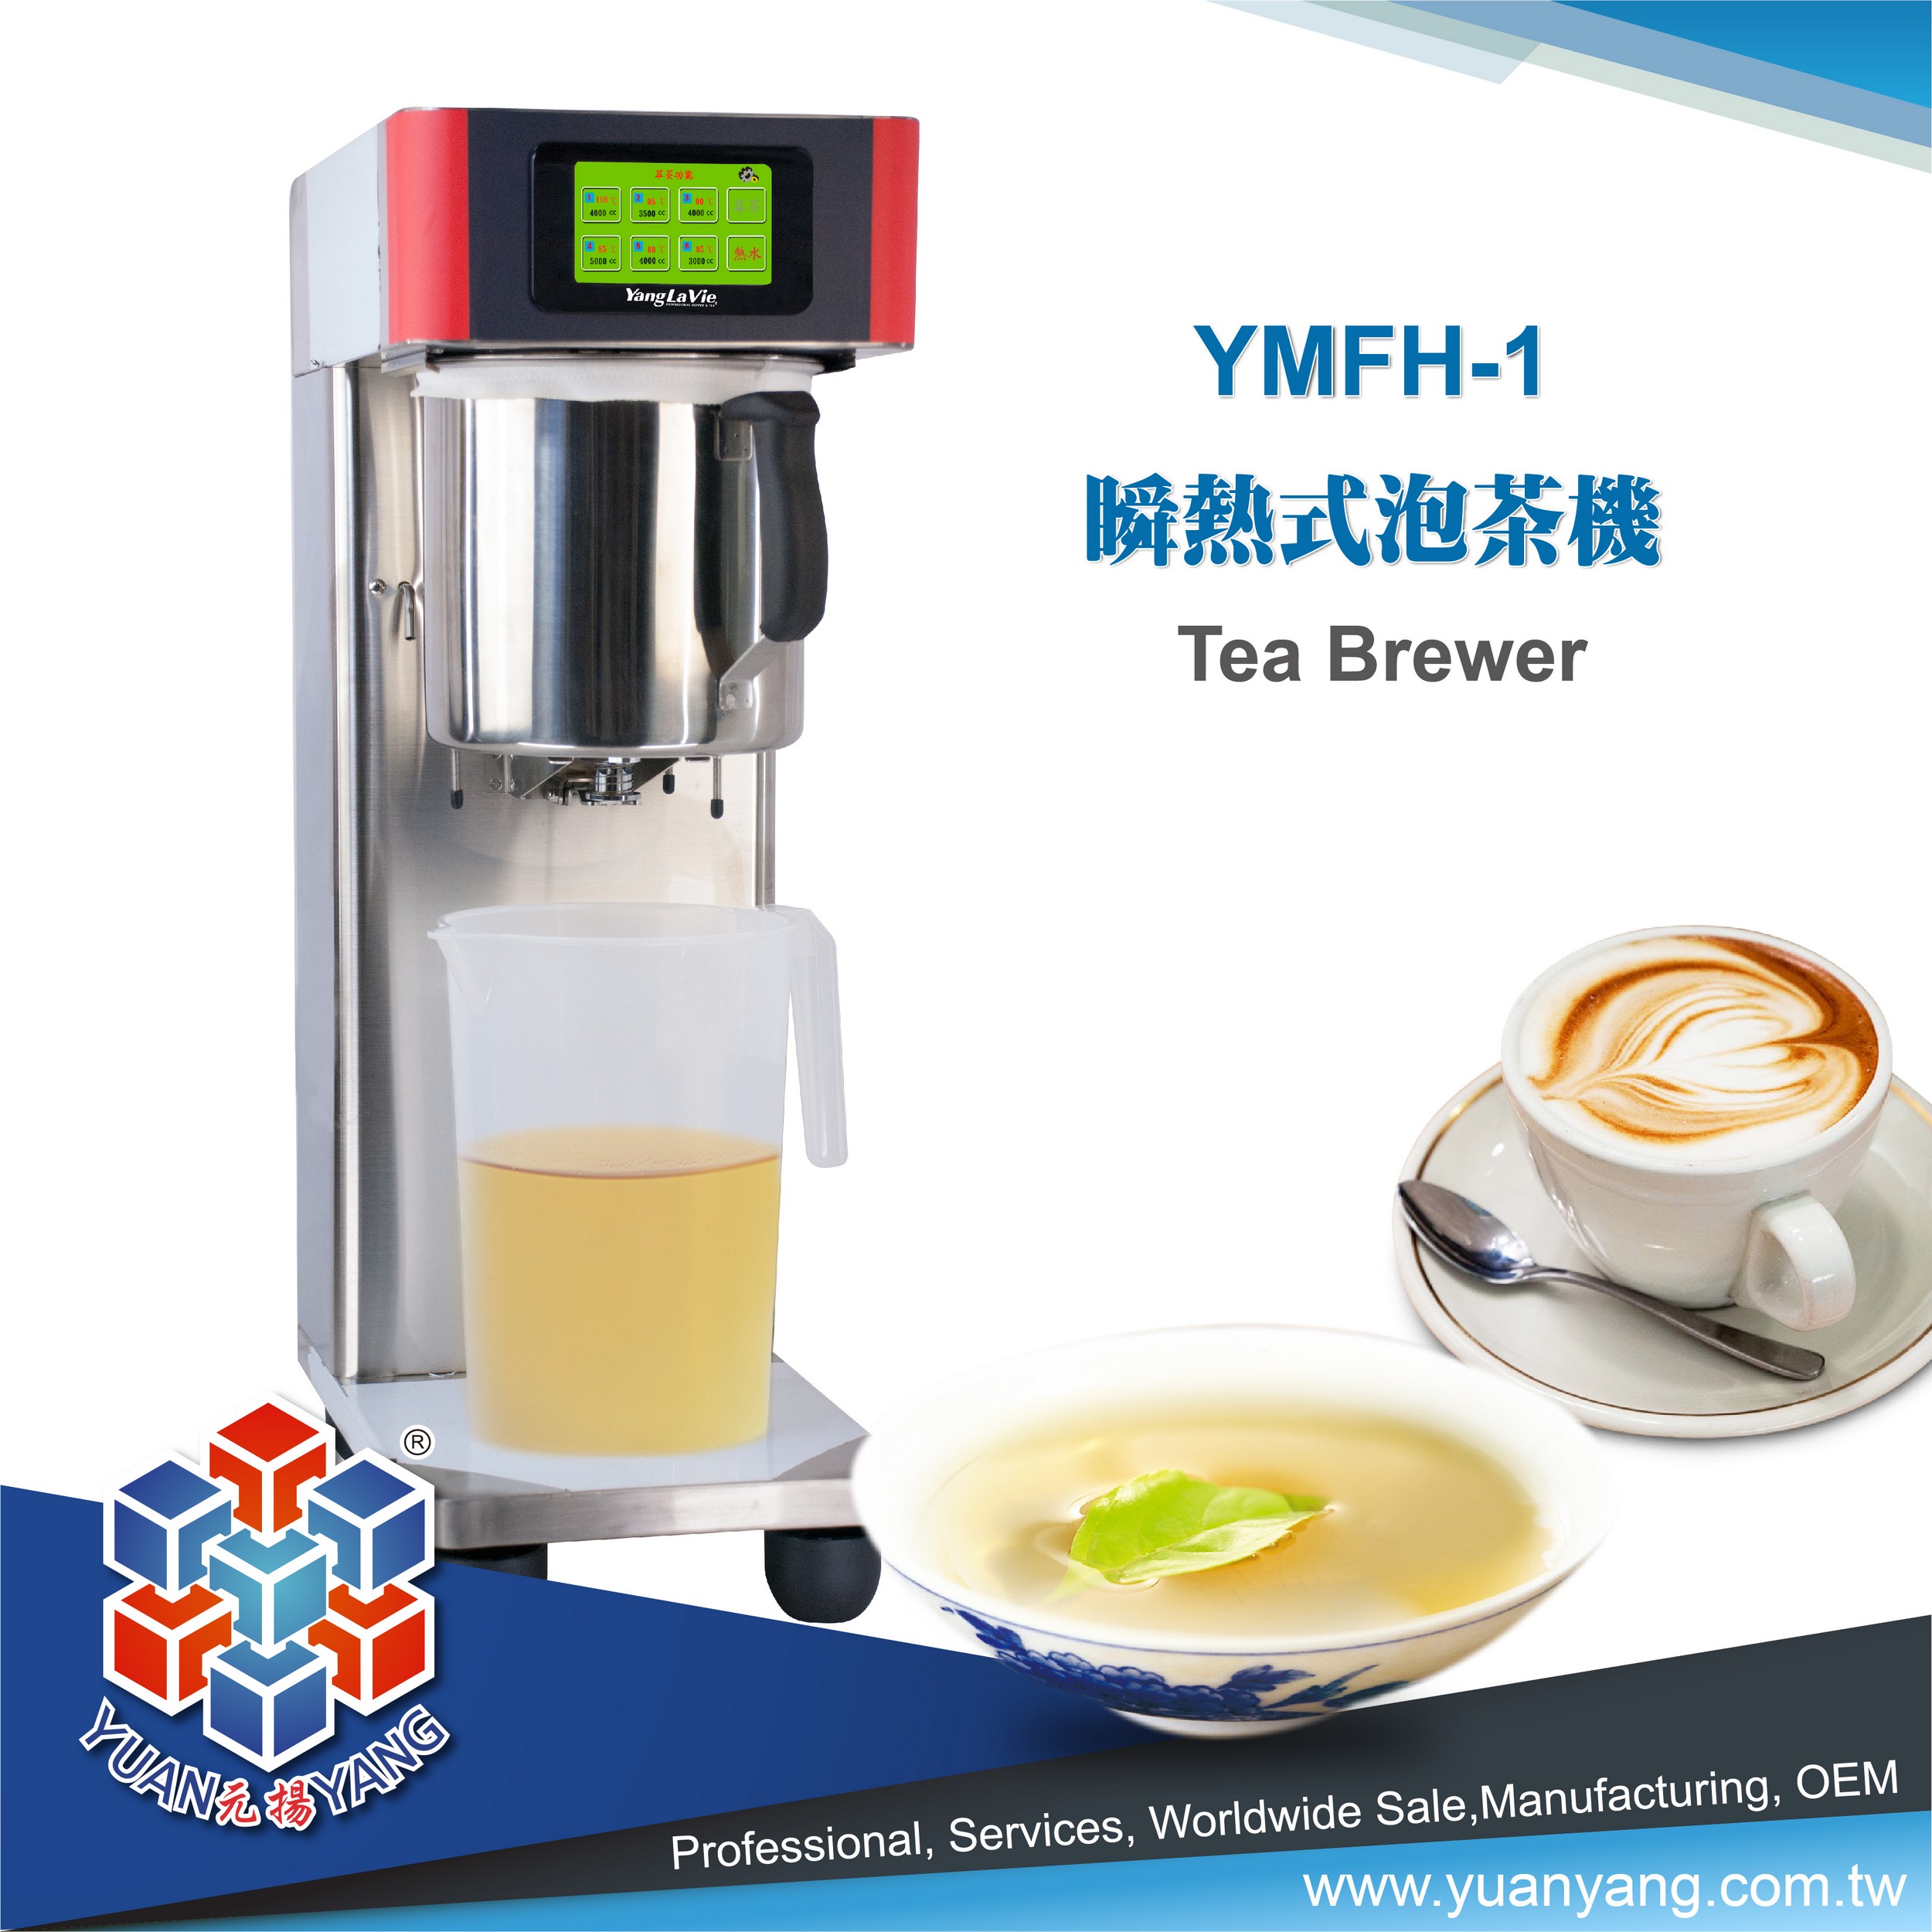 YMFH-1 Instant Heating Tea Brewer, Taiwan YMFH-1 Instant Heating Tea Brewer